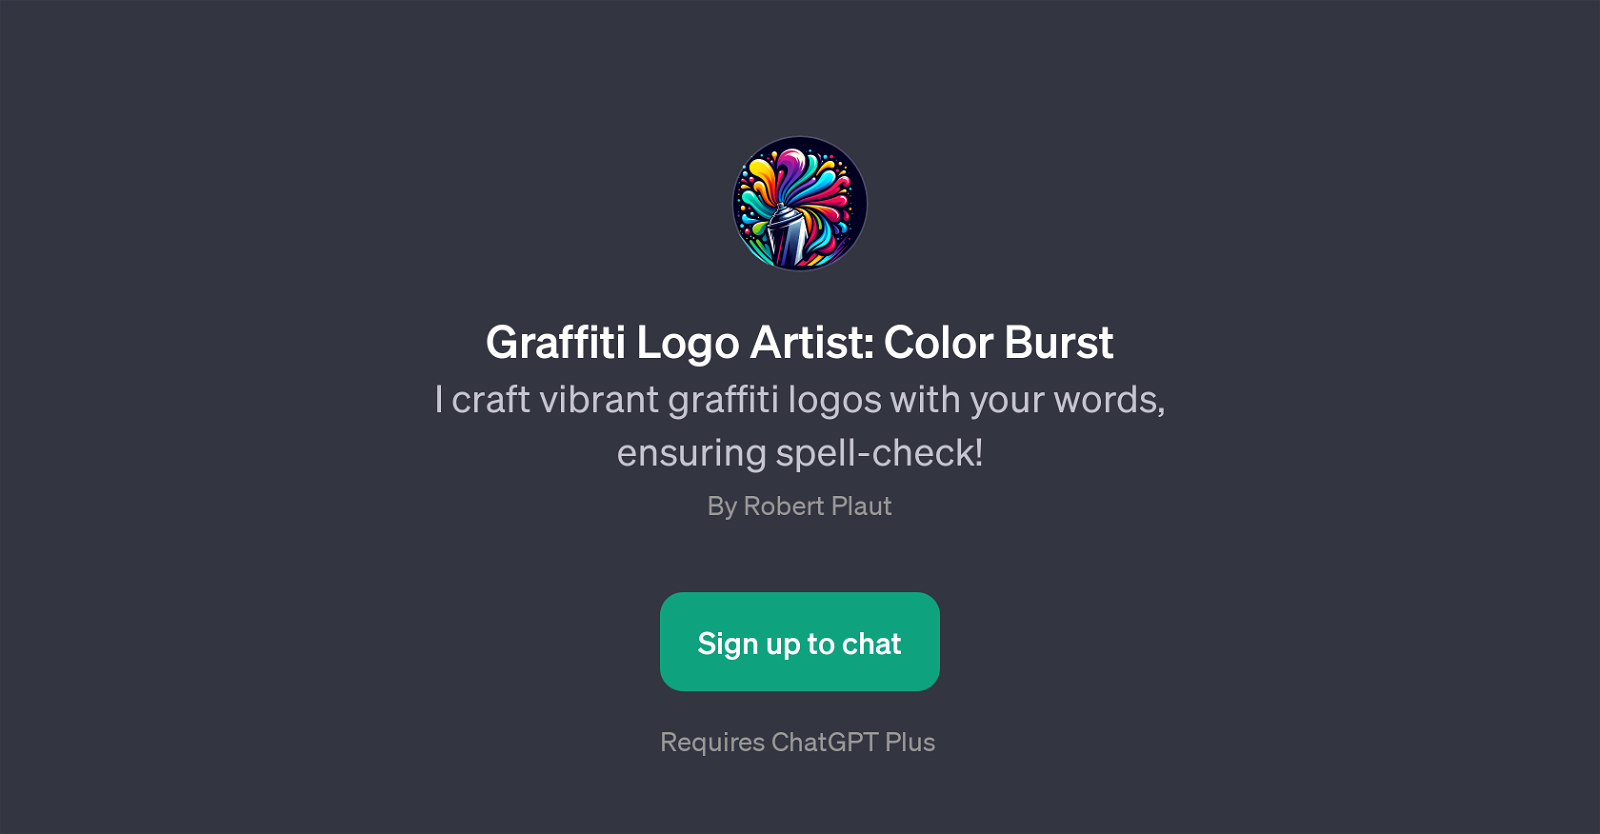 Graffiti Logo Artist: Color Burst website